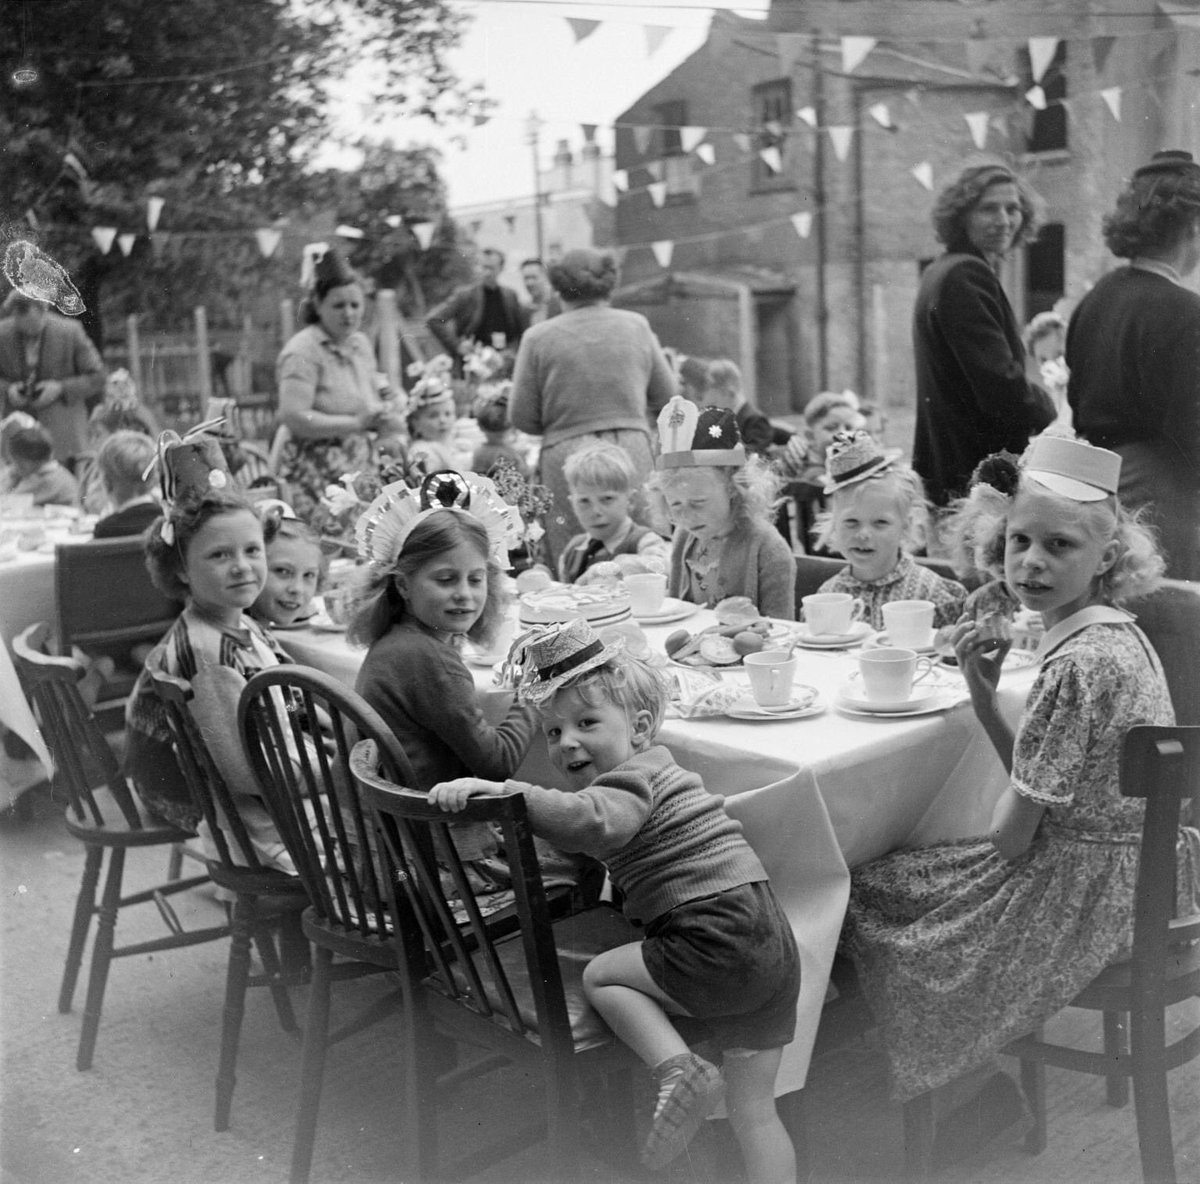 London 1953
#TheWayWeWere
#HalcyconDays